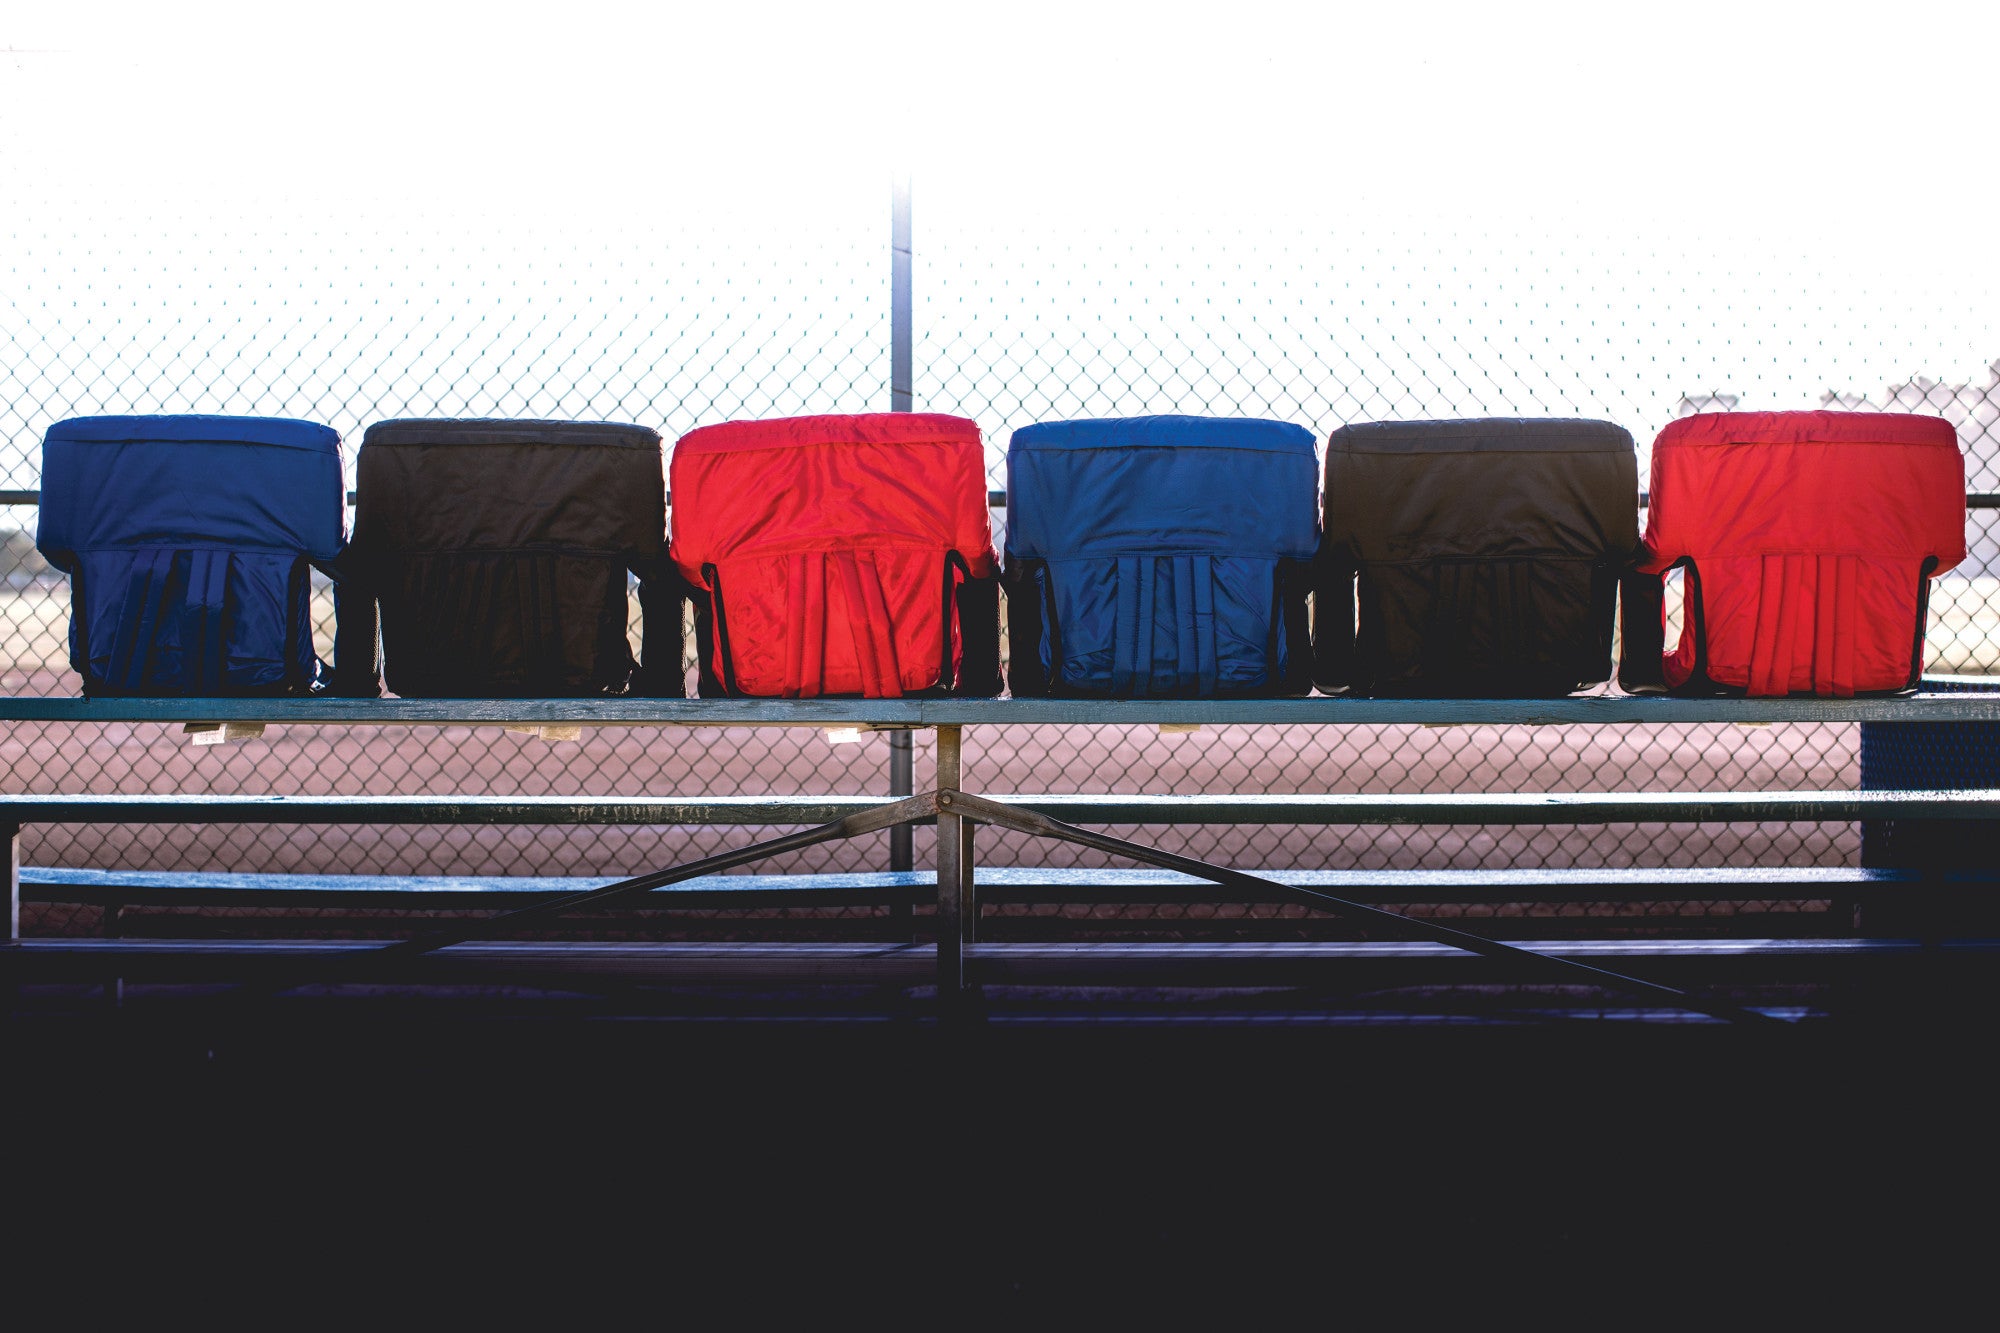 Detroit Red Wings - Ventura Portable Reclining Stadium Seat